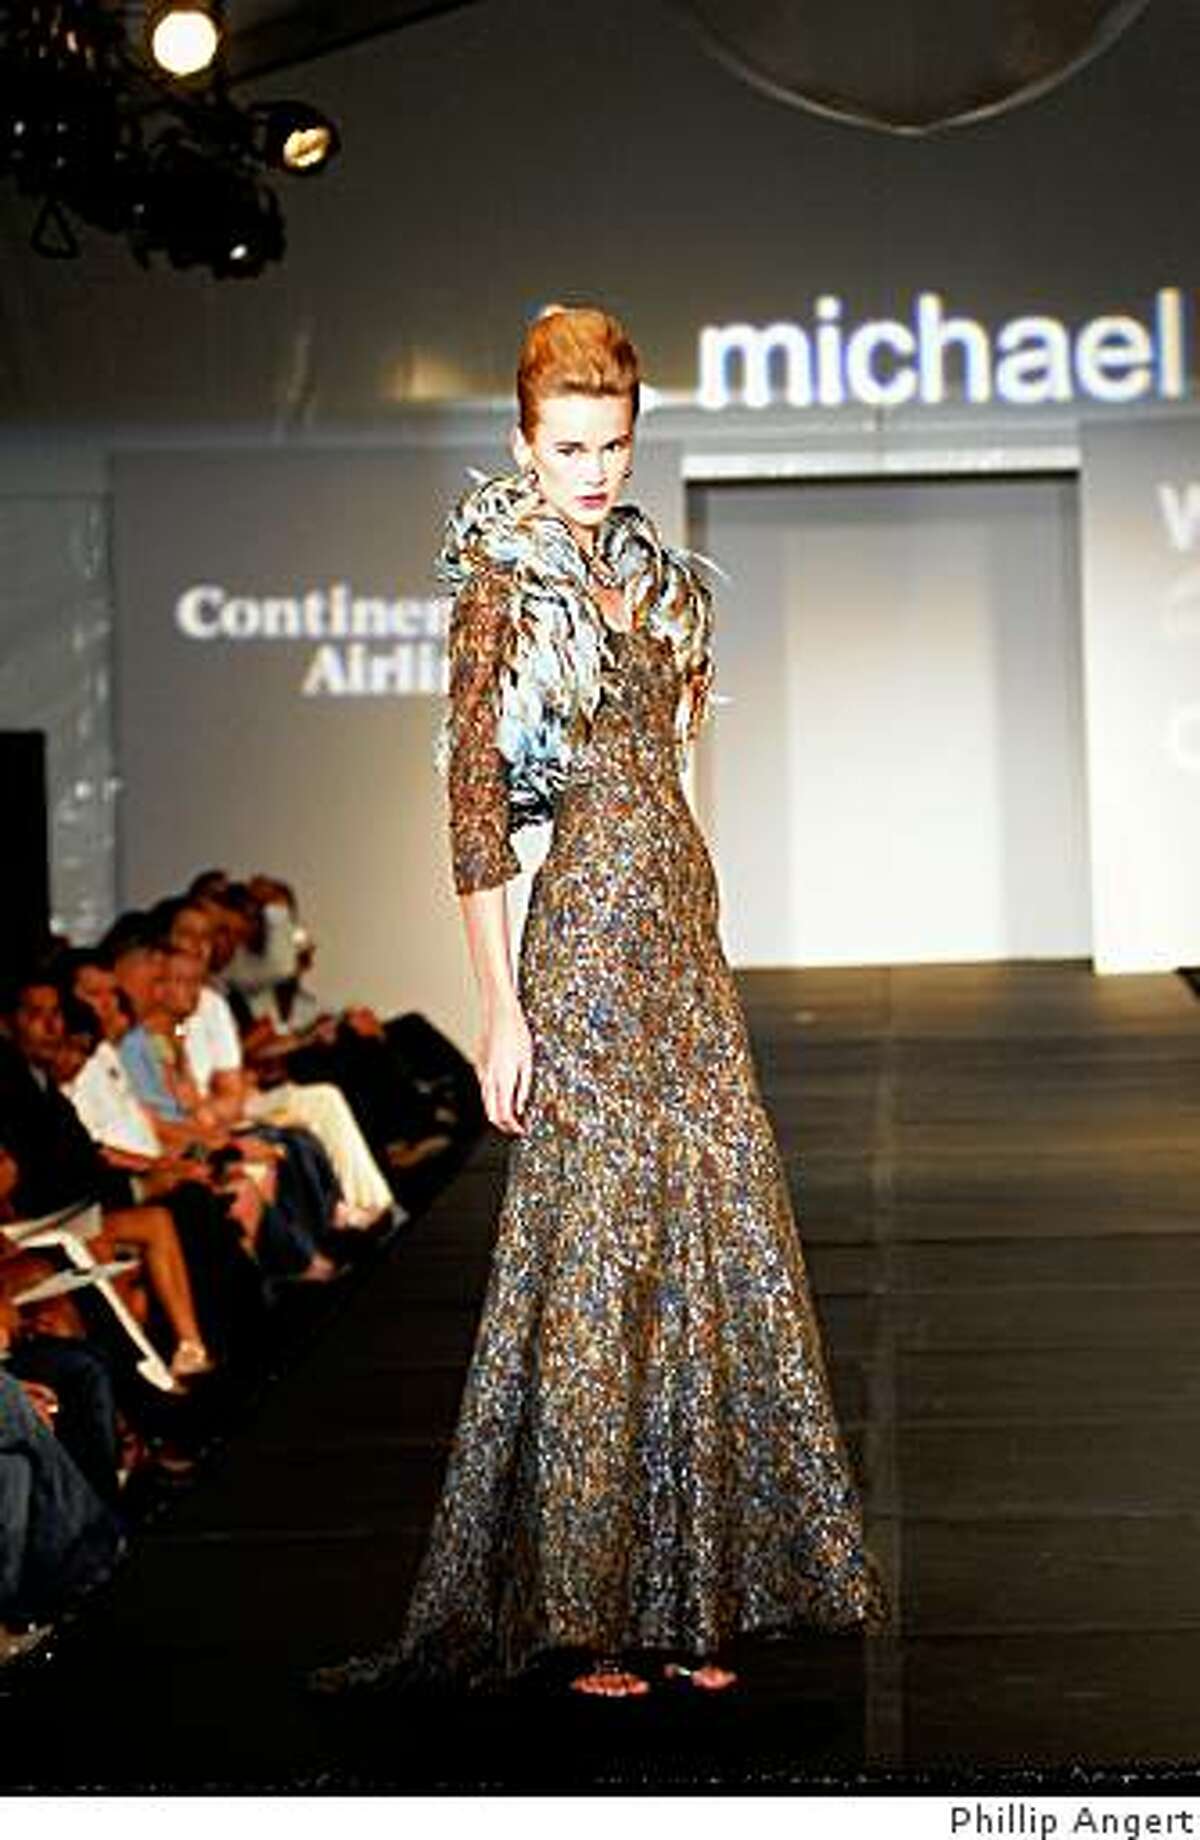 michael fashion designer